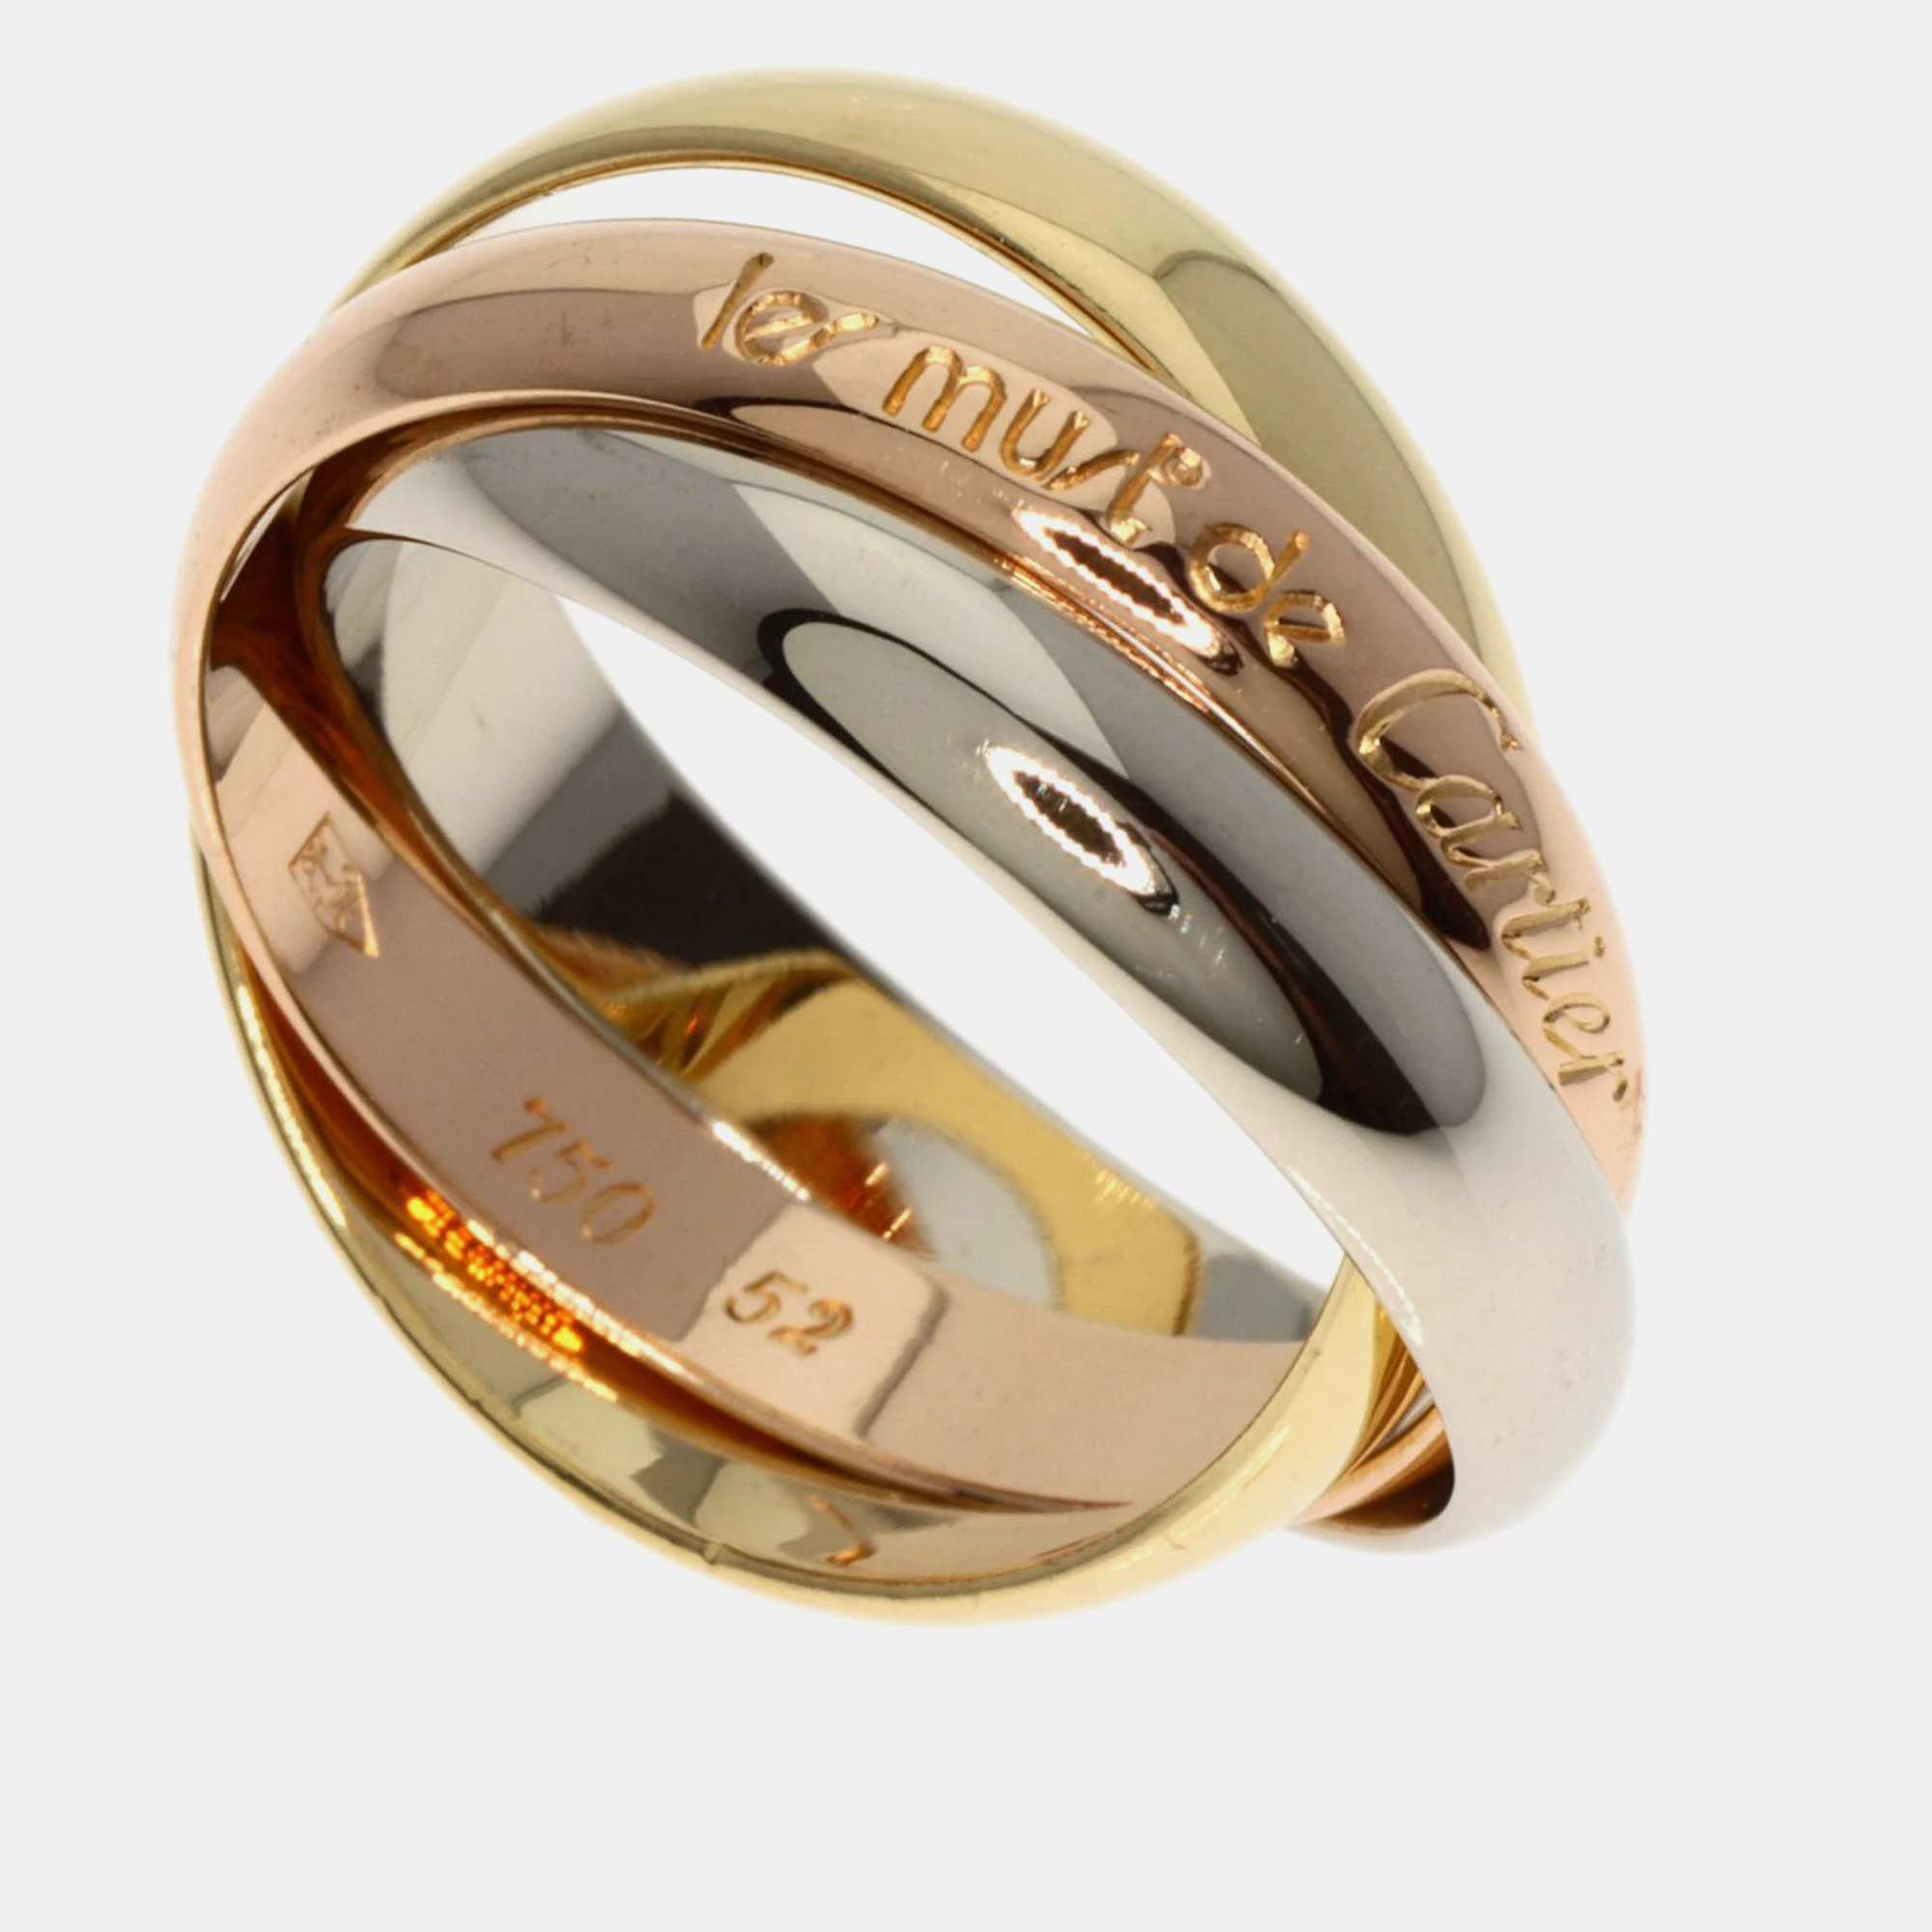 Cartier 18k yellow, rose, white gold trinity band ring eu 52